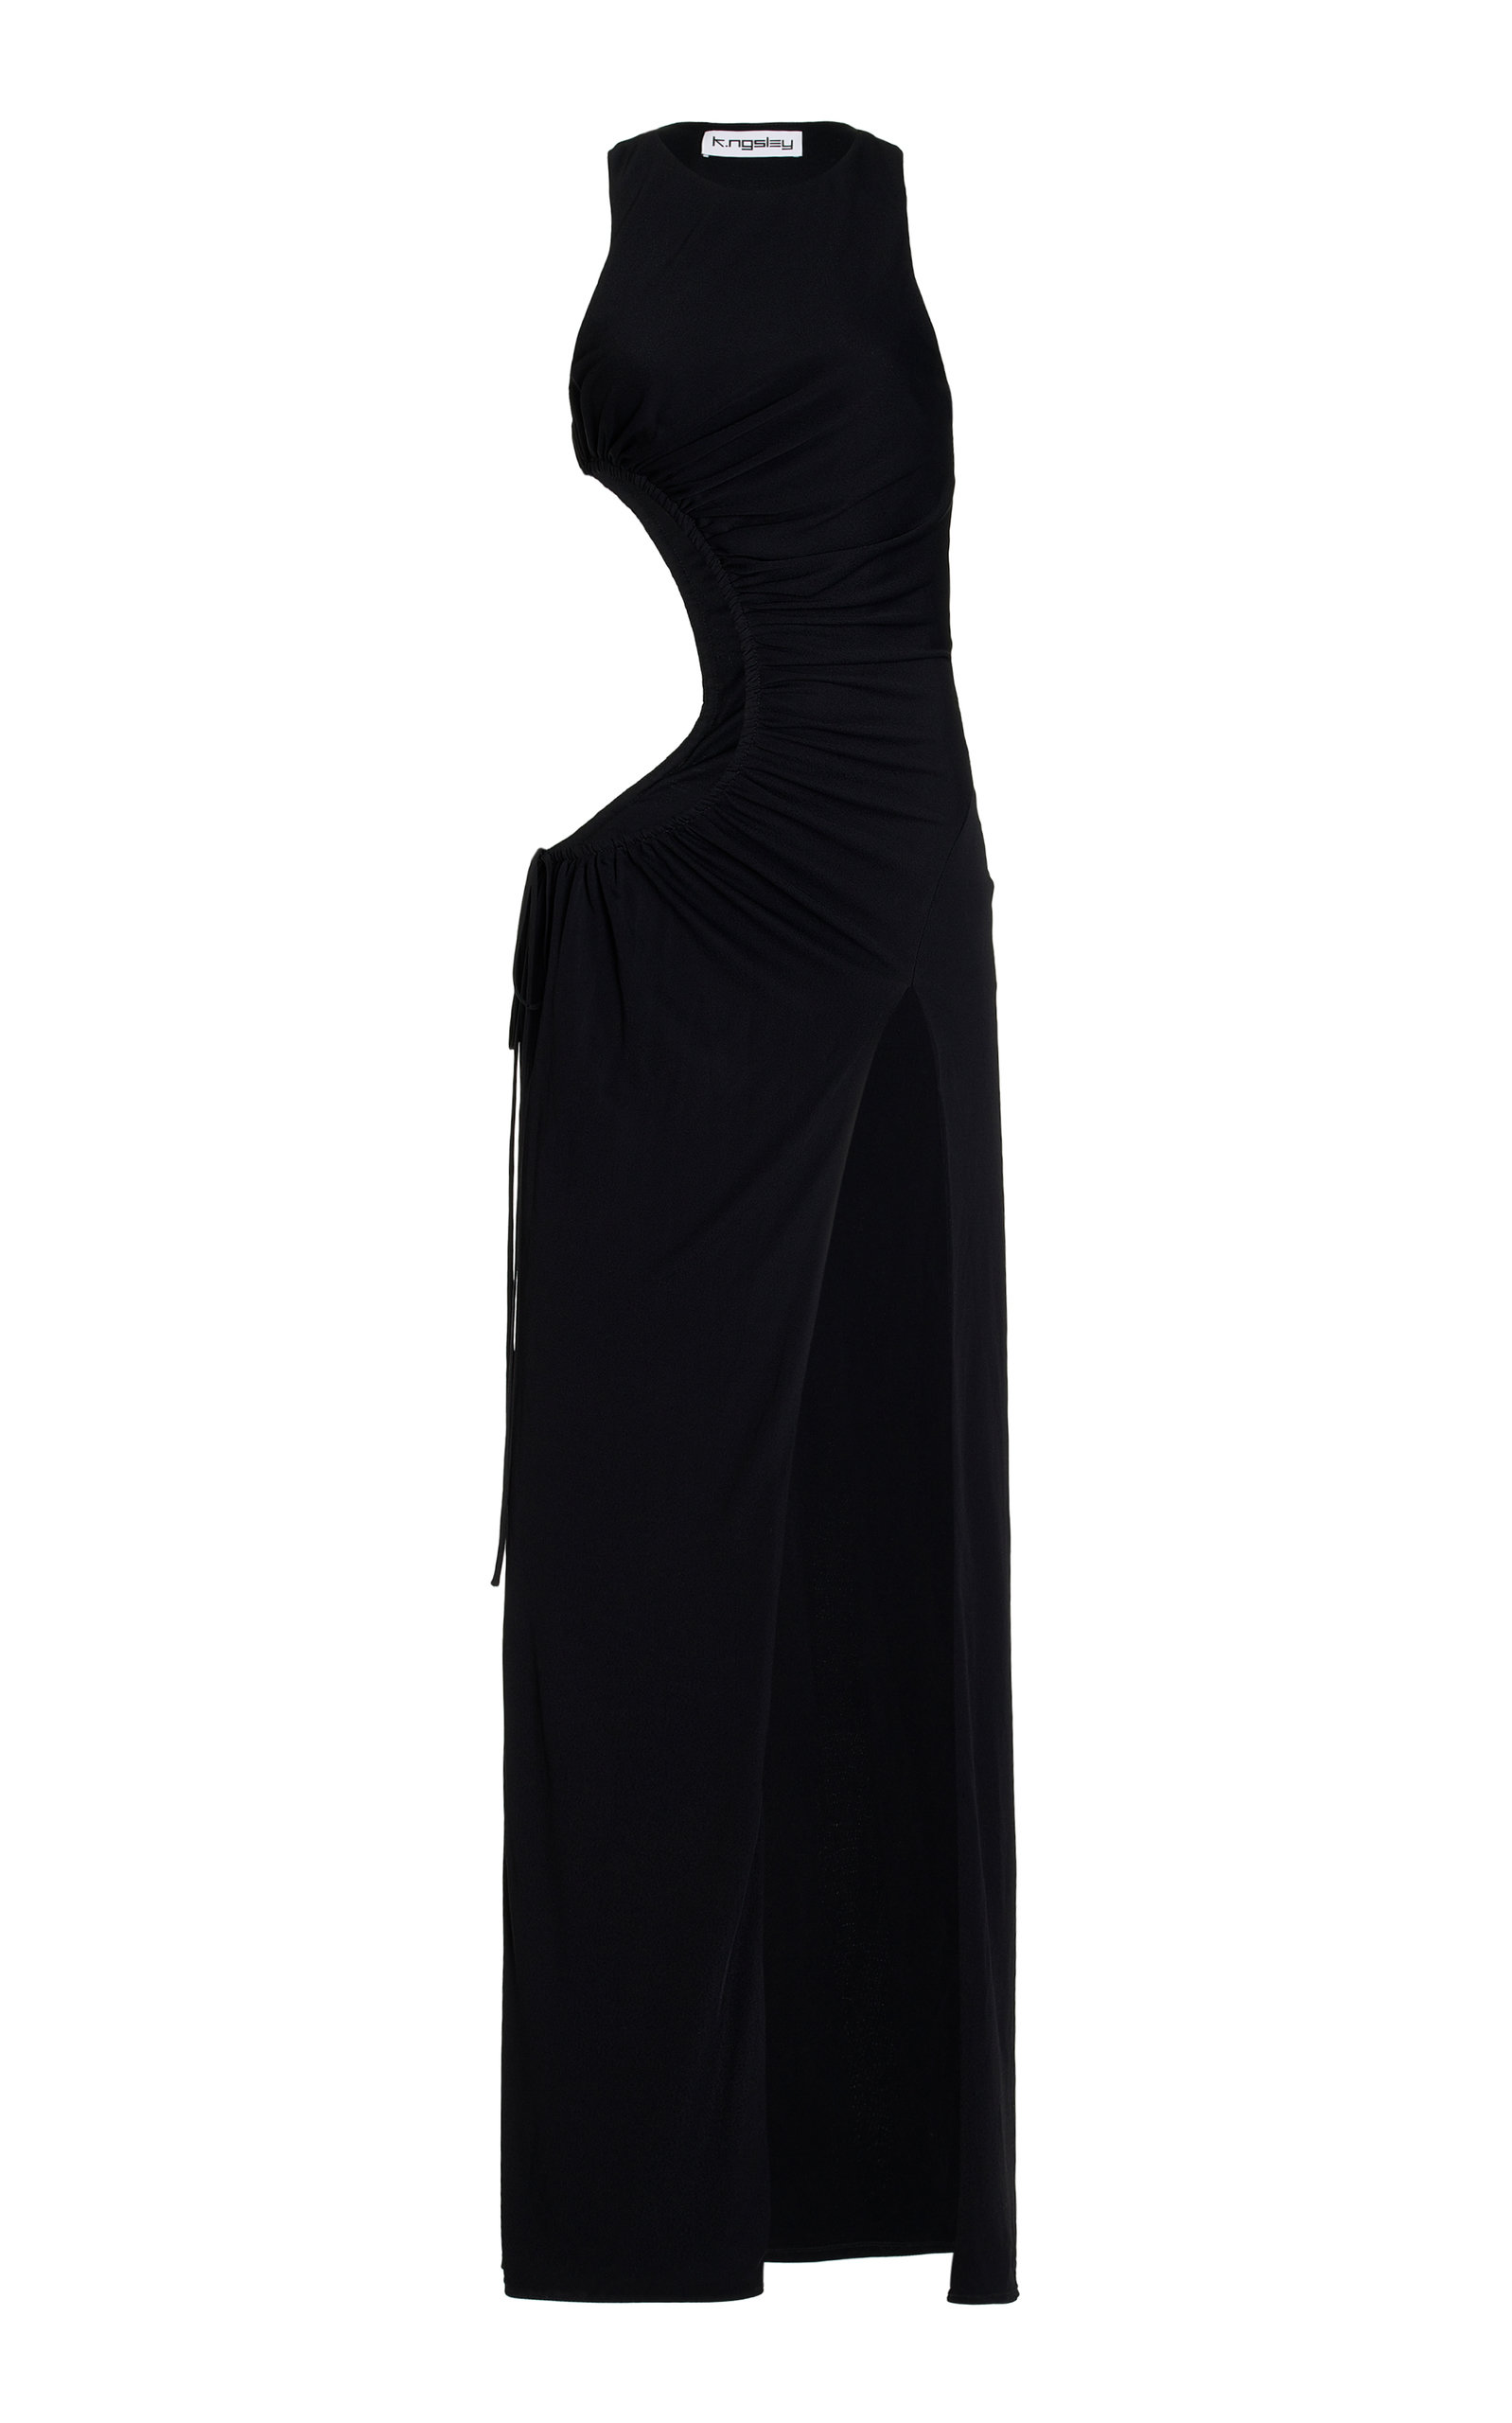 K.ngsley Women's Exclusive Chérie Jersey Maxi Dress